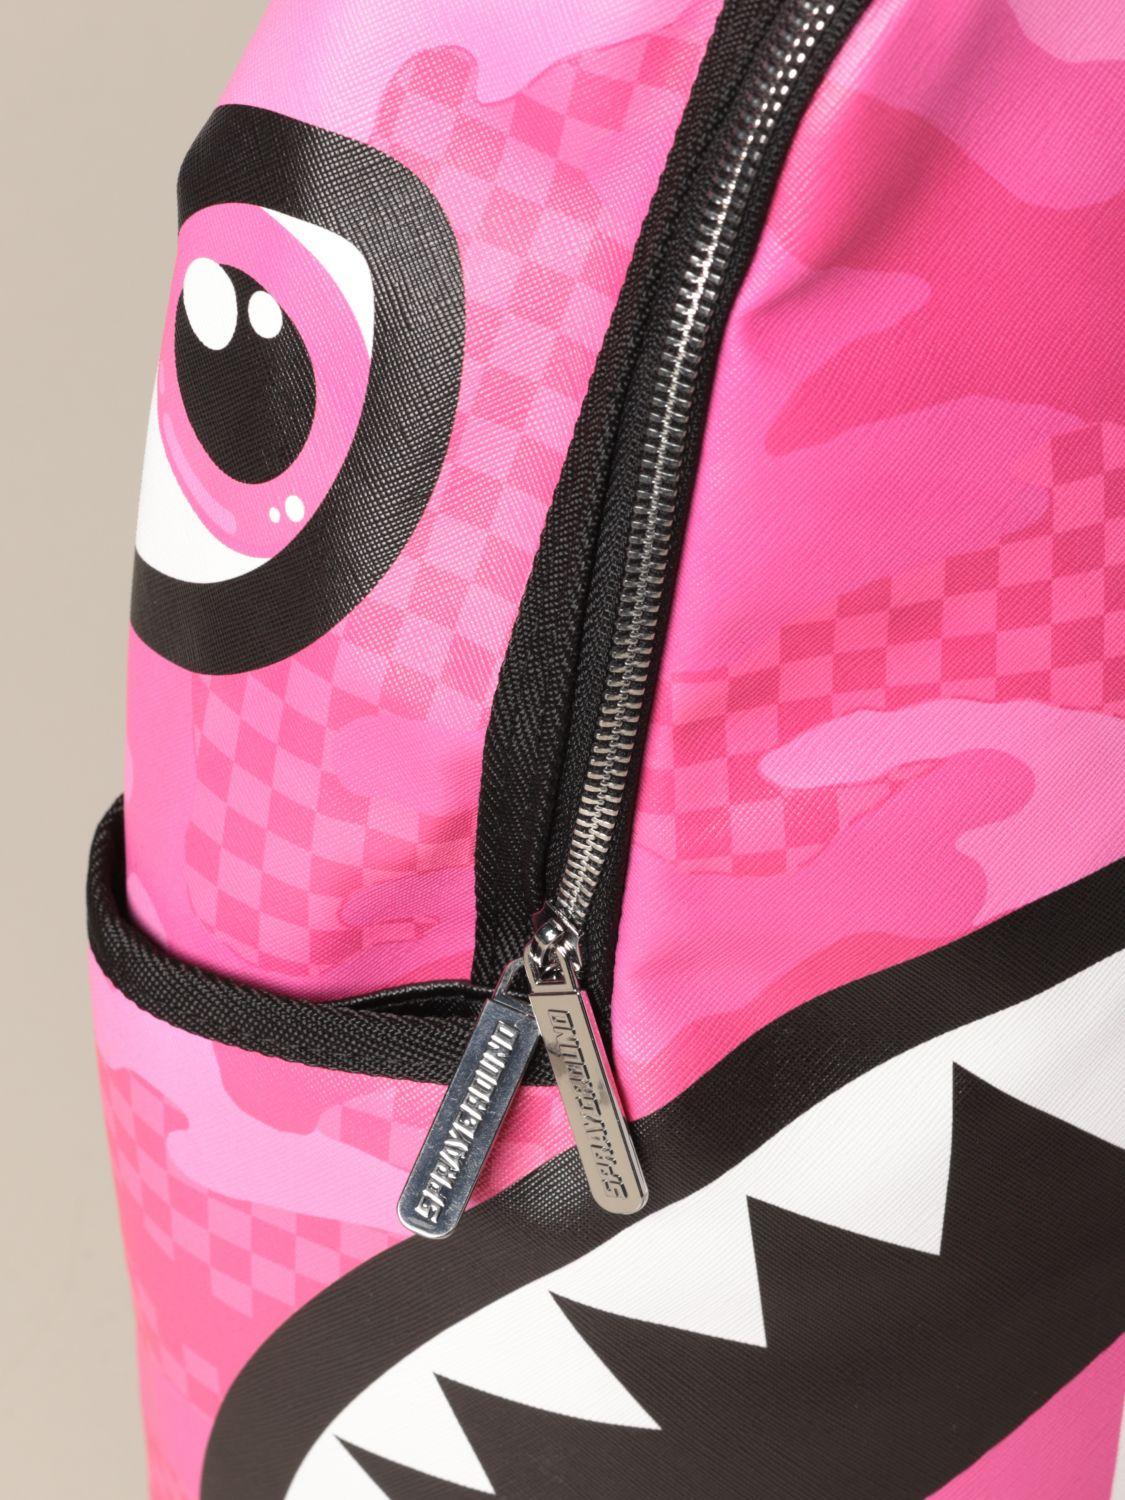 Sprayground Lil Sassy Backpack in Pink for Men